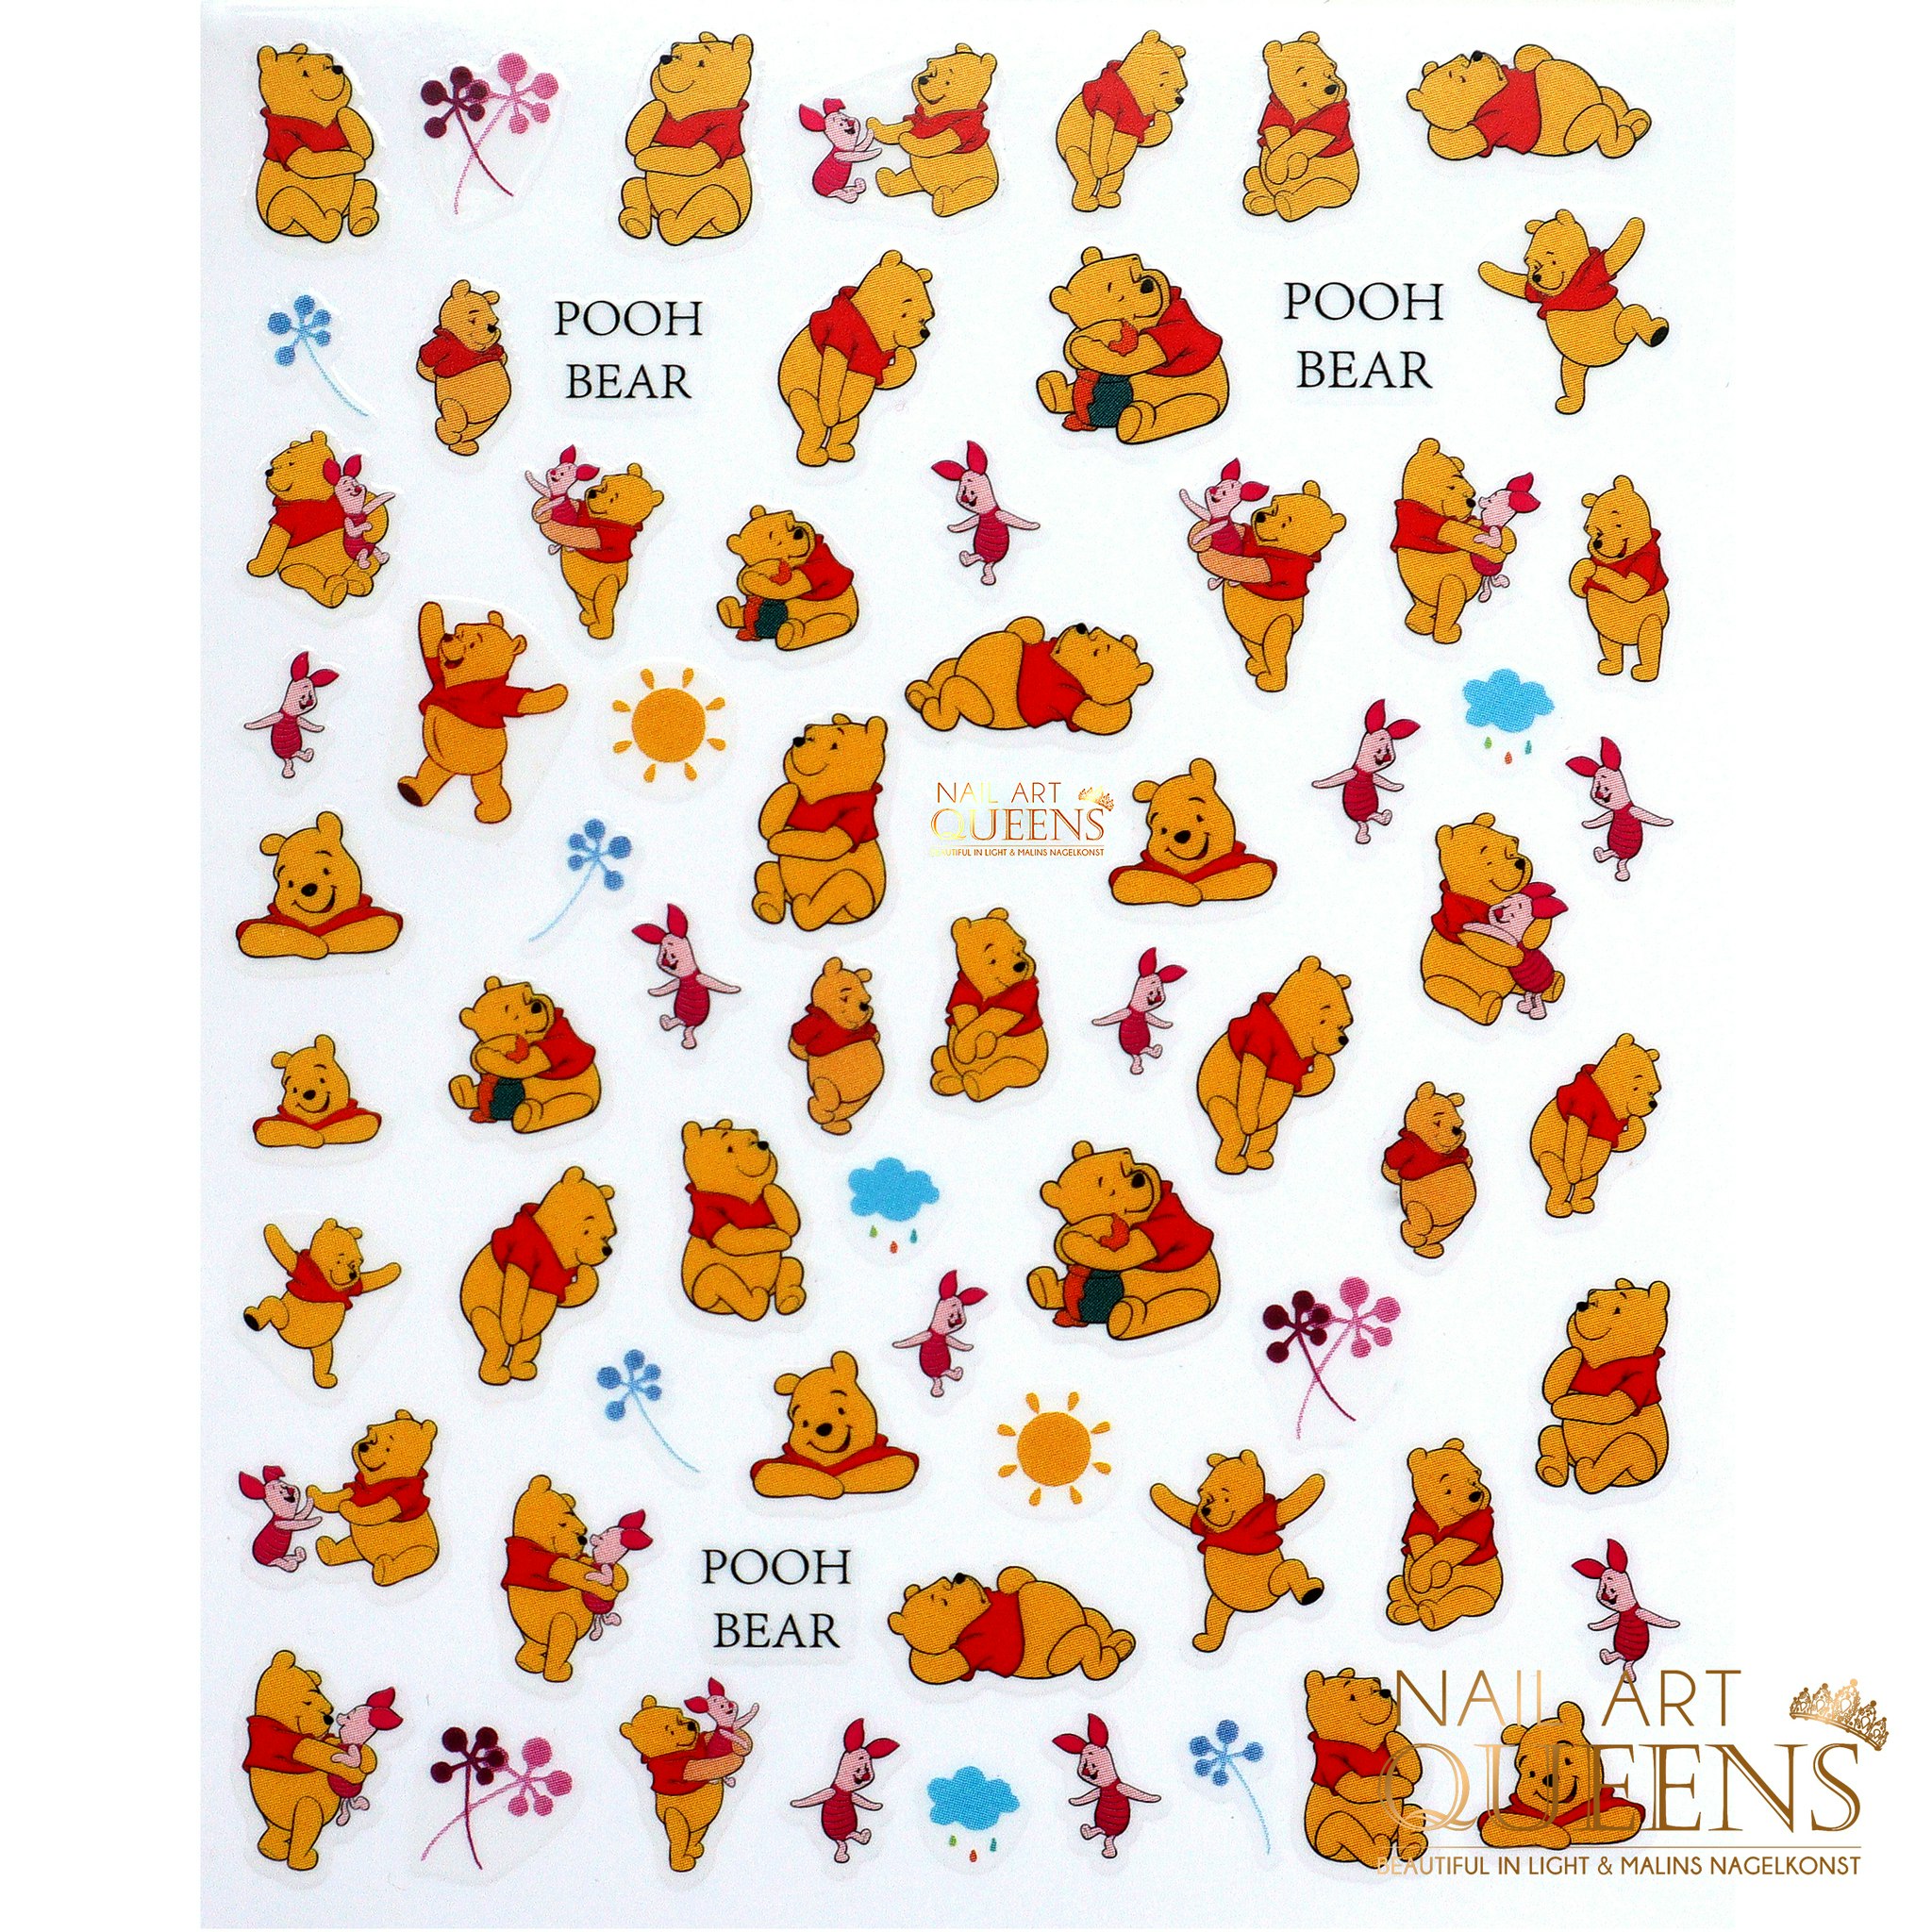 Stickers Winnie the Pooh Bear